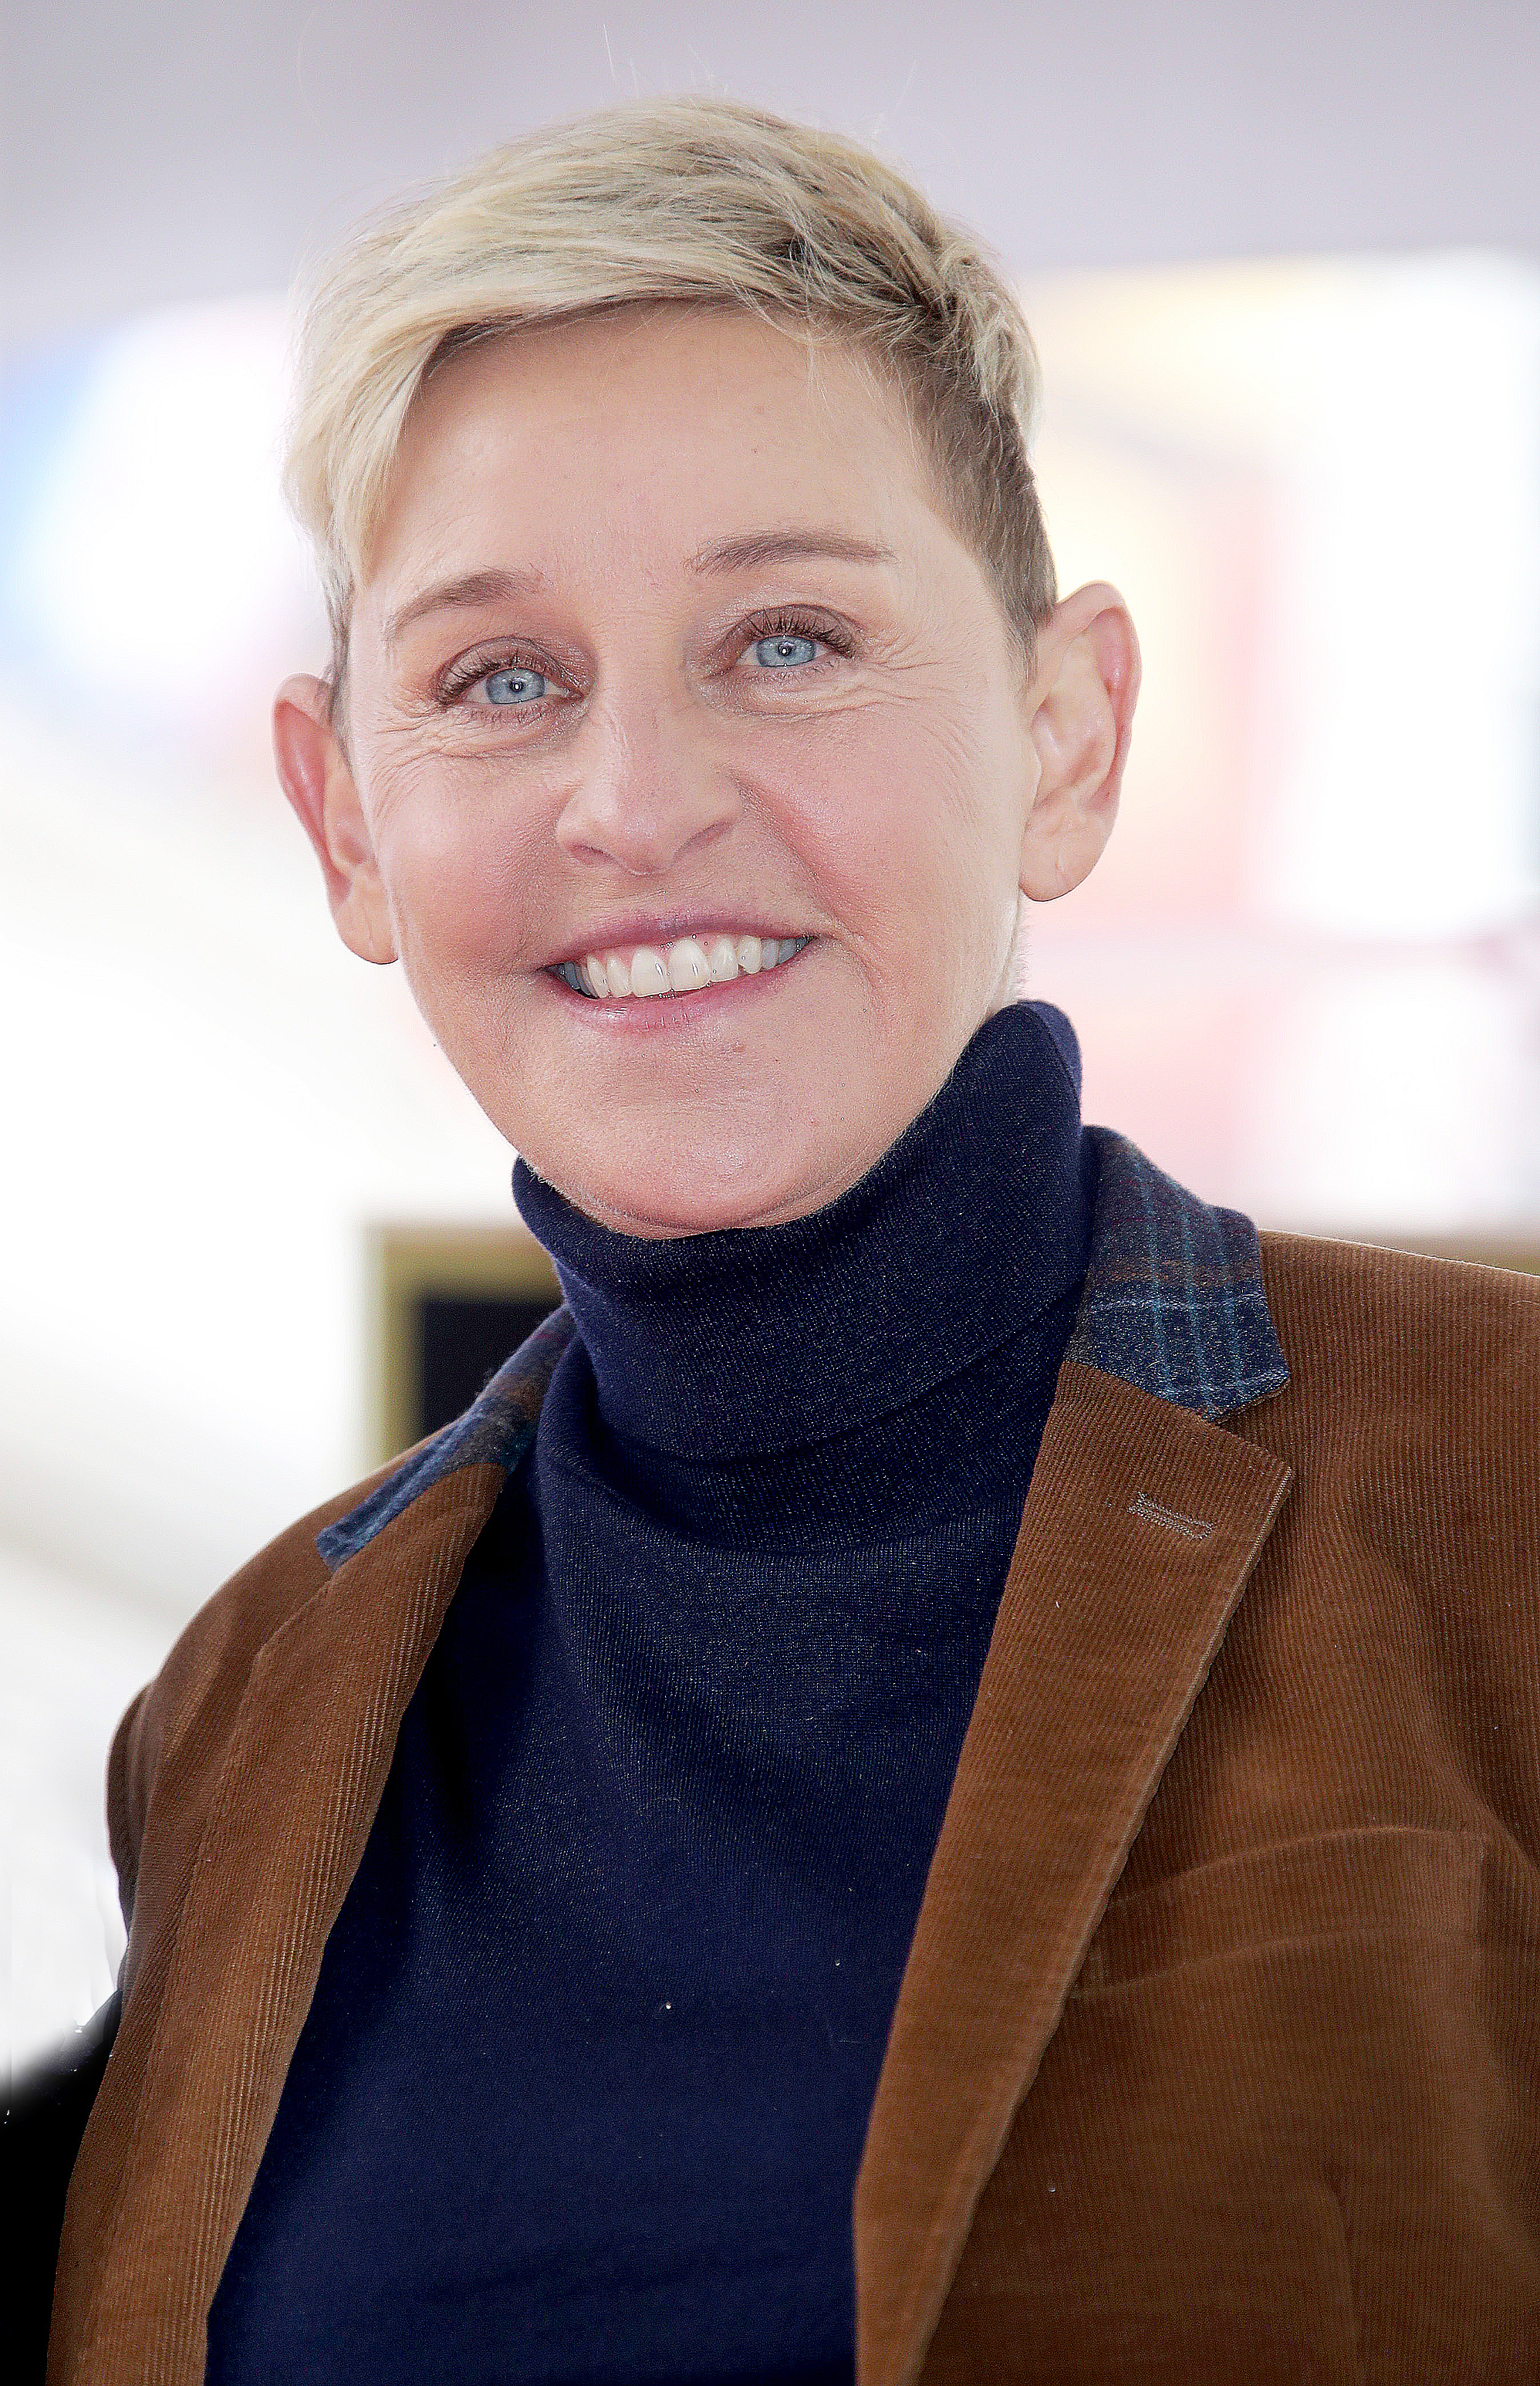 Ellen Degeneres Gray Hair After Bad Dye Job